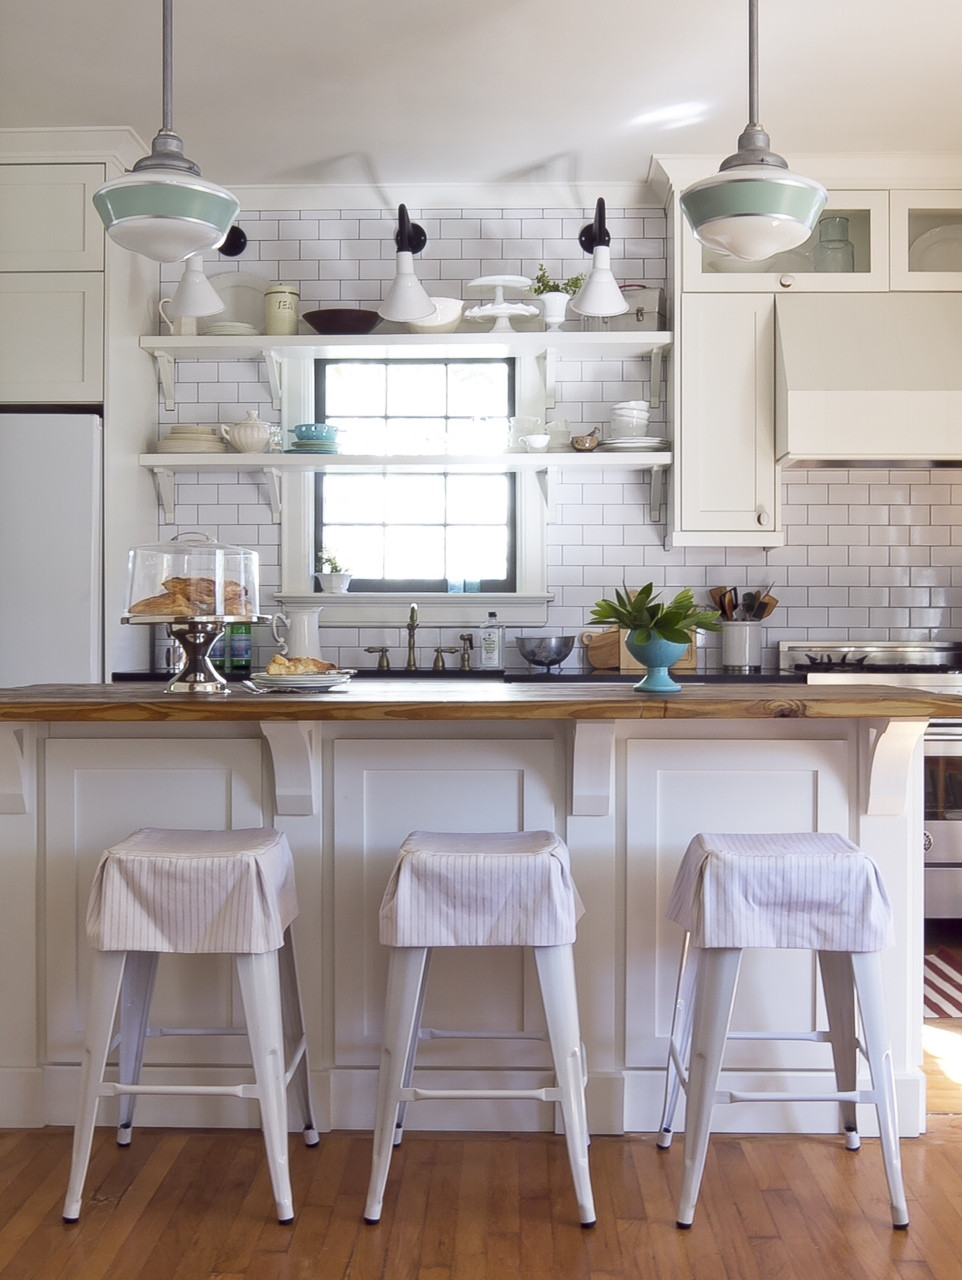 Farmhouse Kitchen Island Lighting
 Angle Shades a Risky Rewarding Choice for Decatur Kitchen